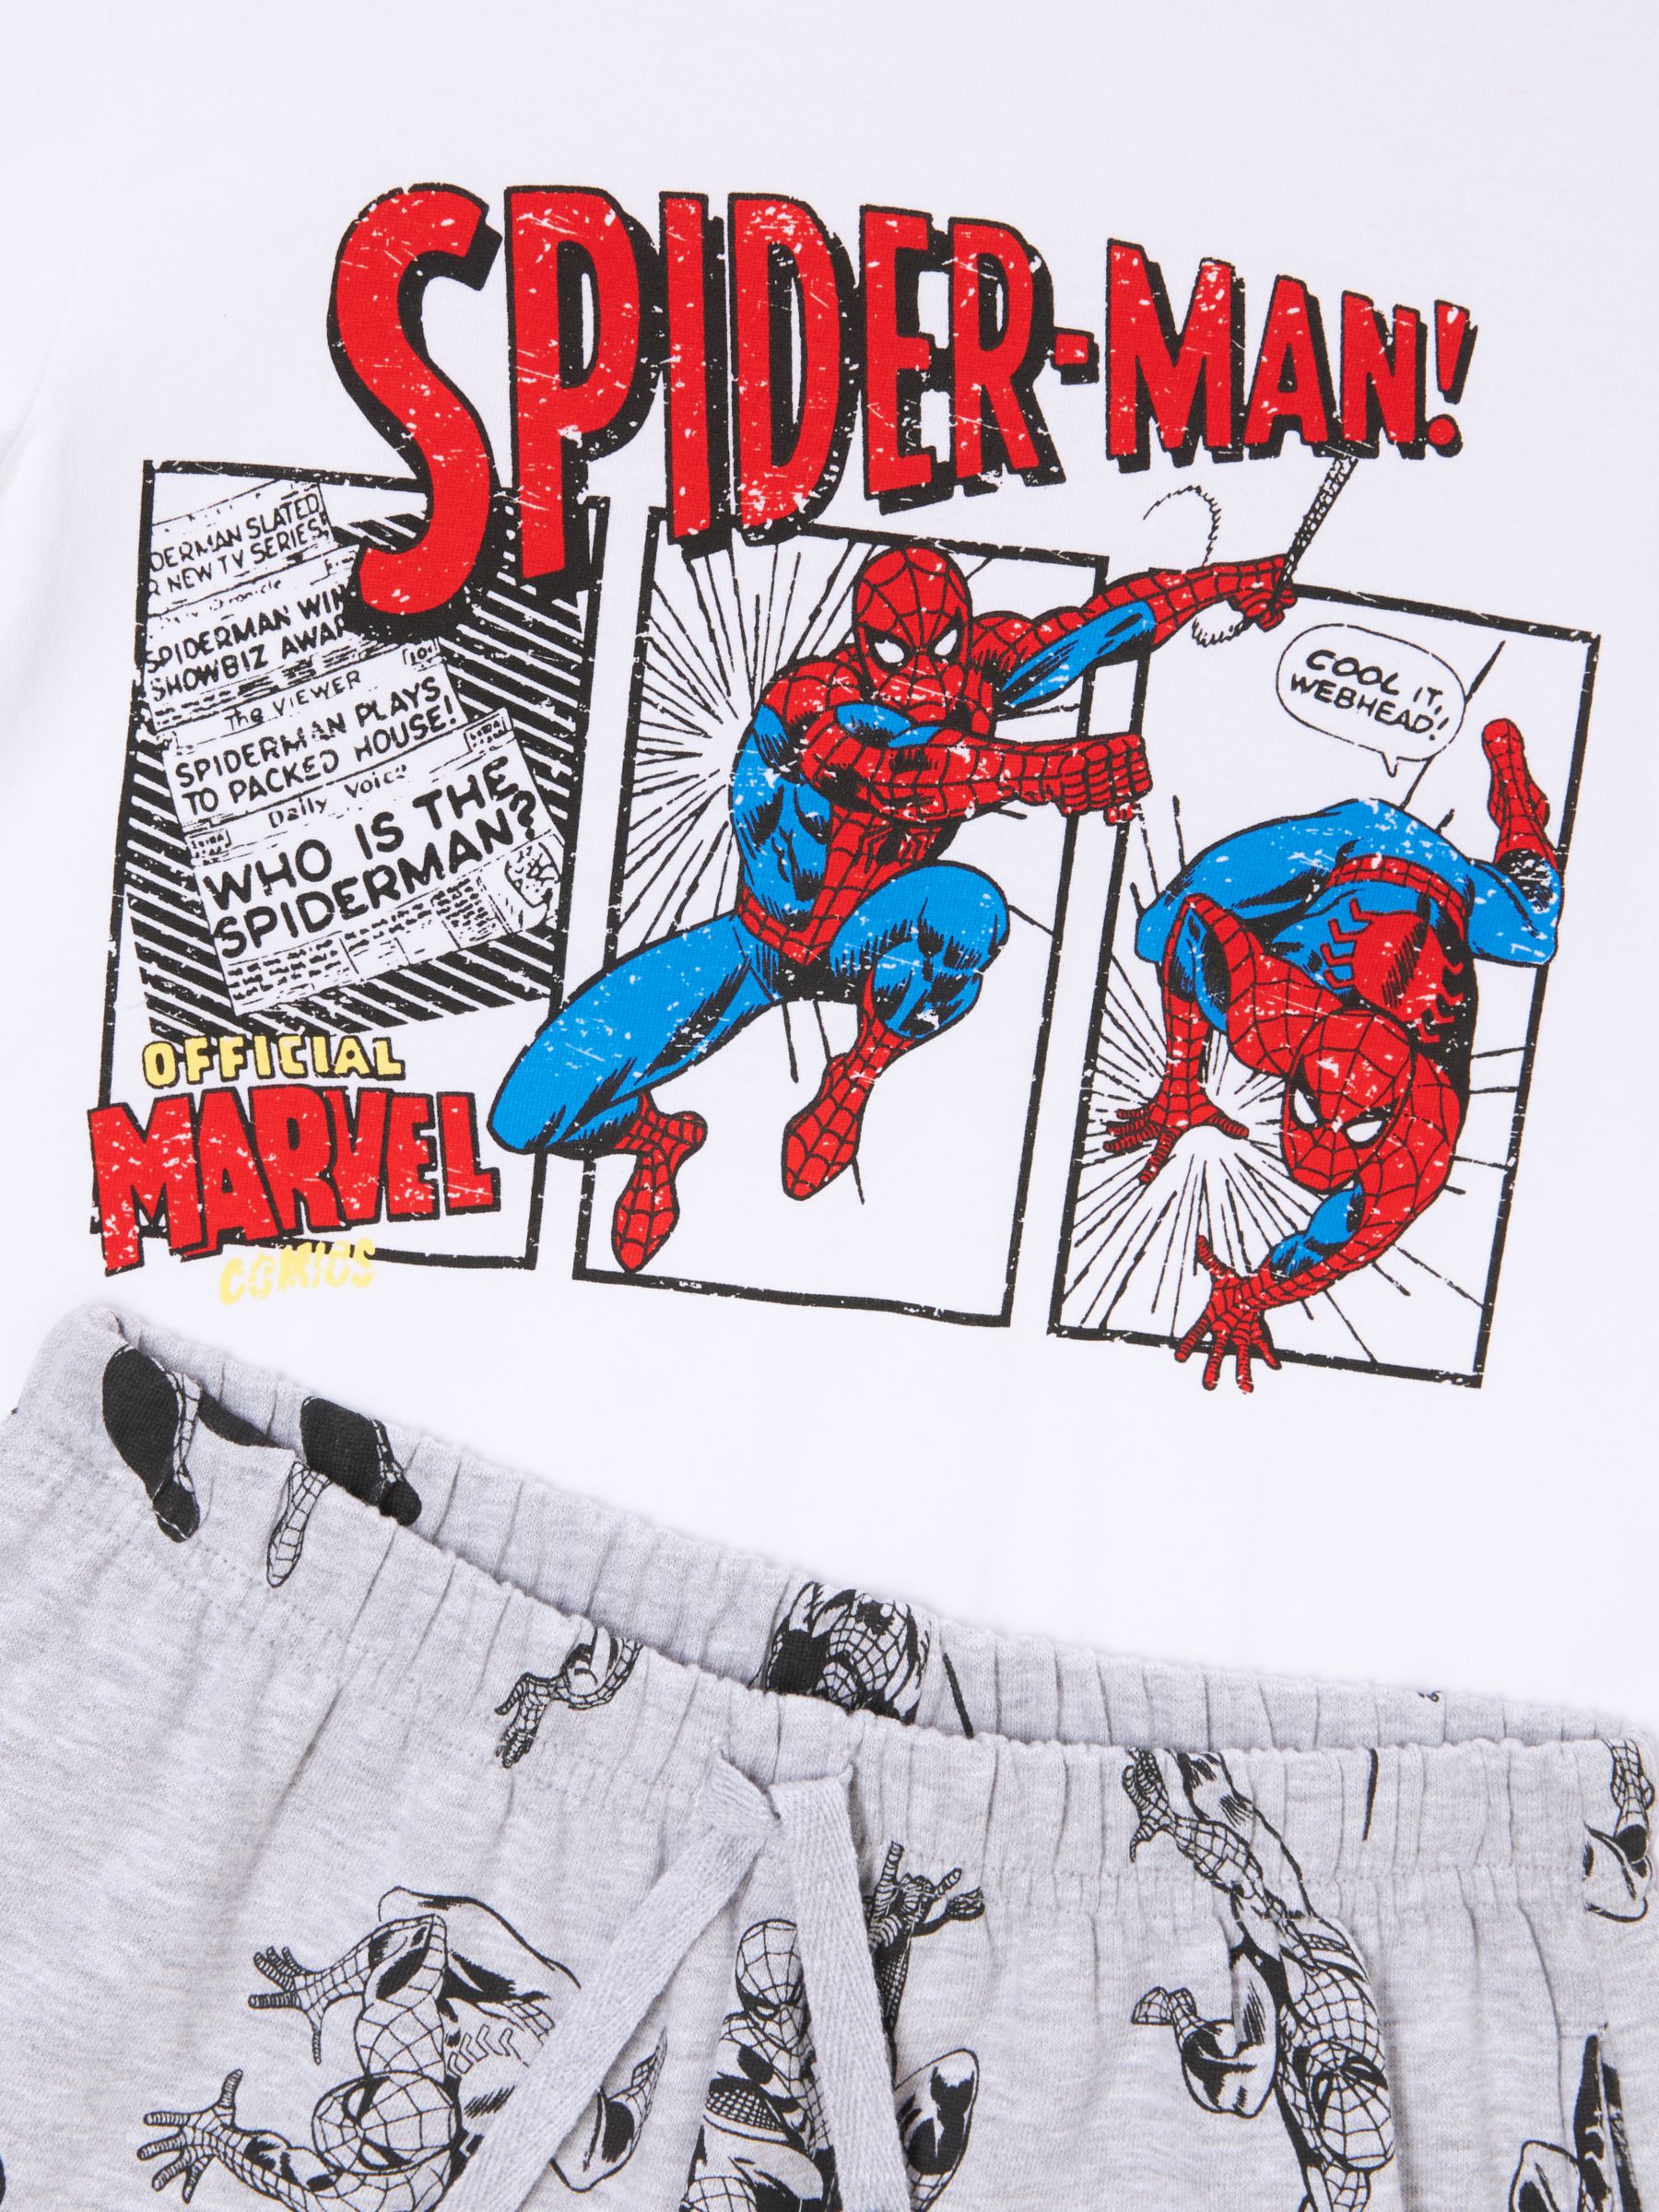 Brand Threads Kids' Spider-Man T-Shirt & Shorts Set, Grey/White, 4-5 years